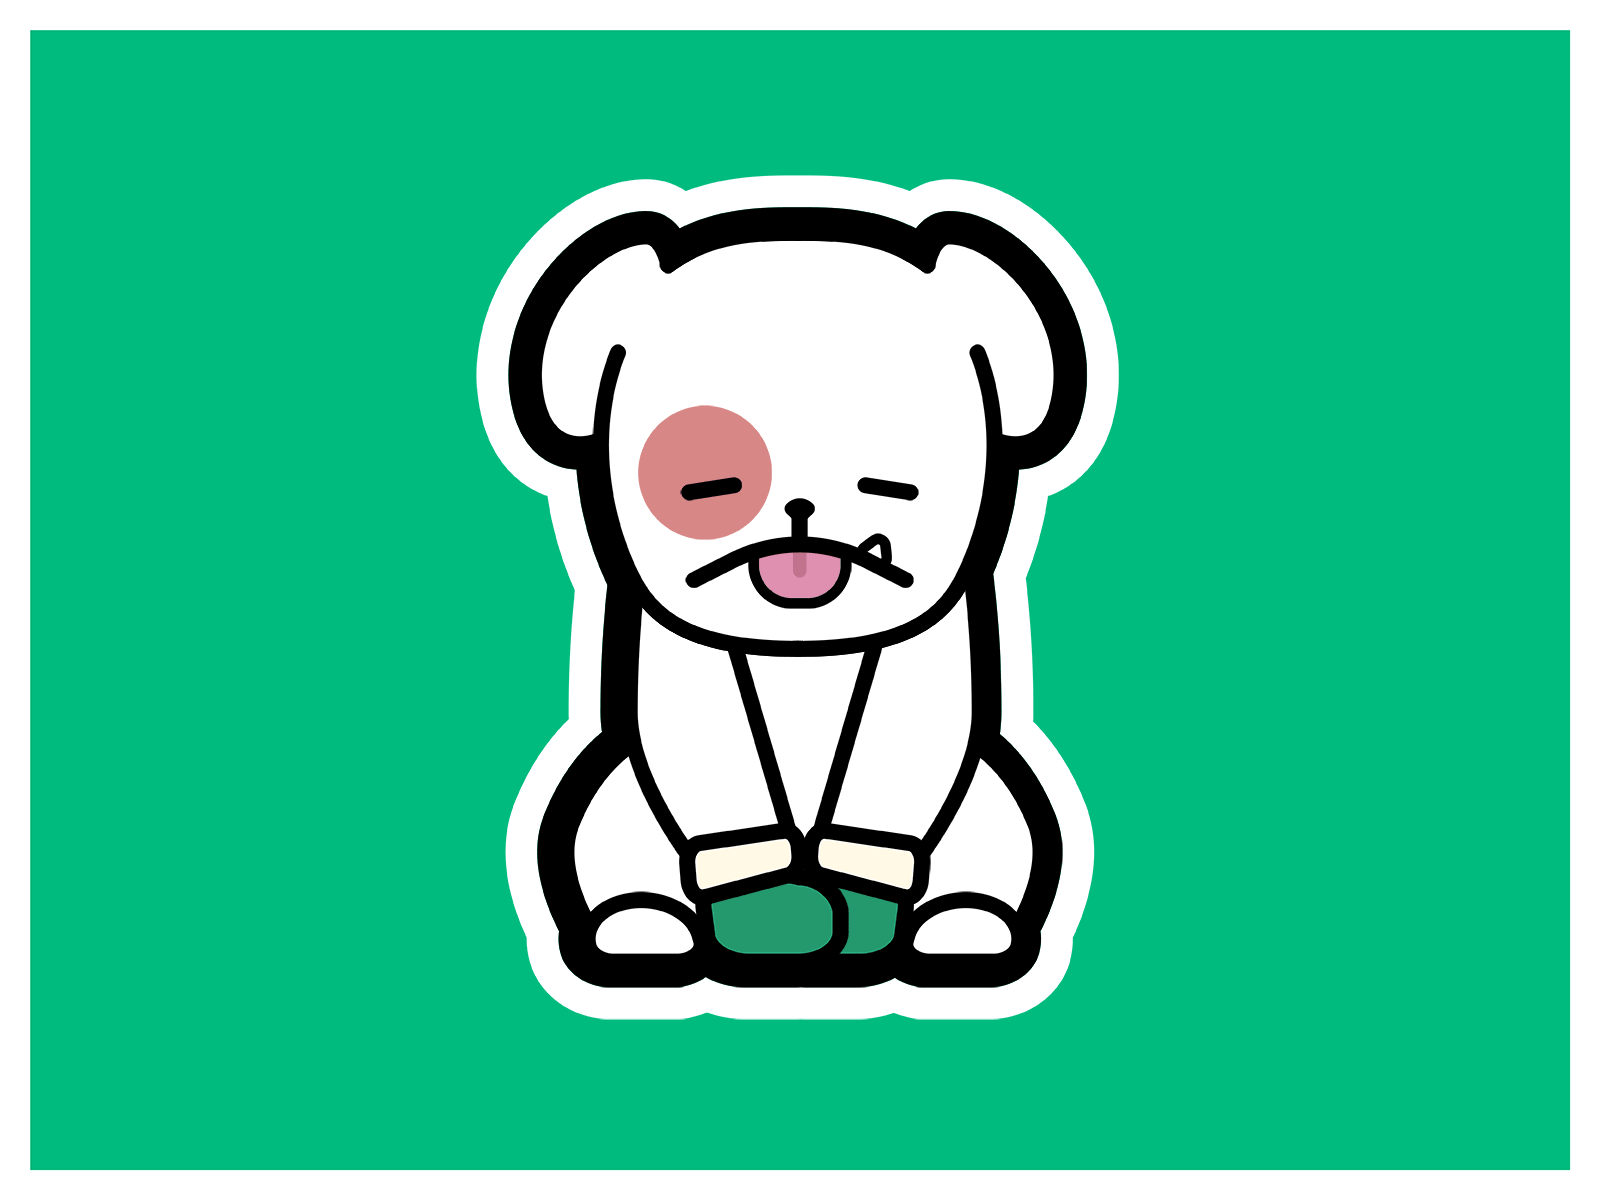 Bulldog concept character/mascot